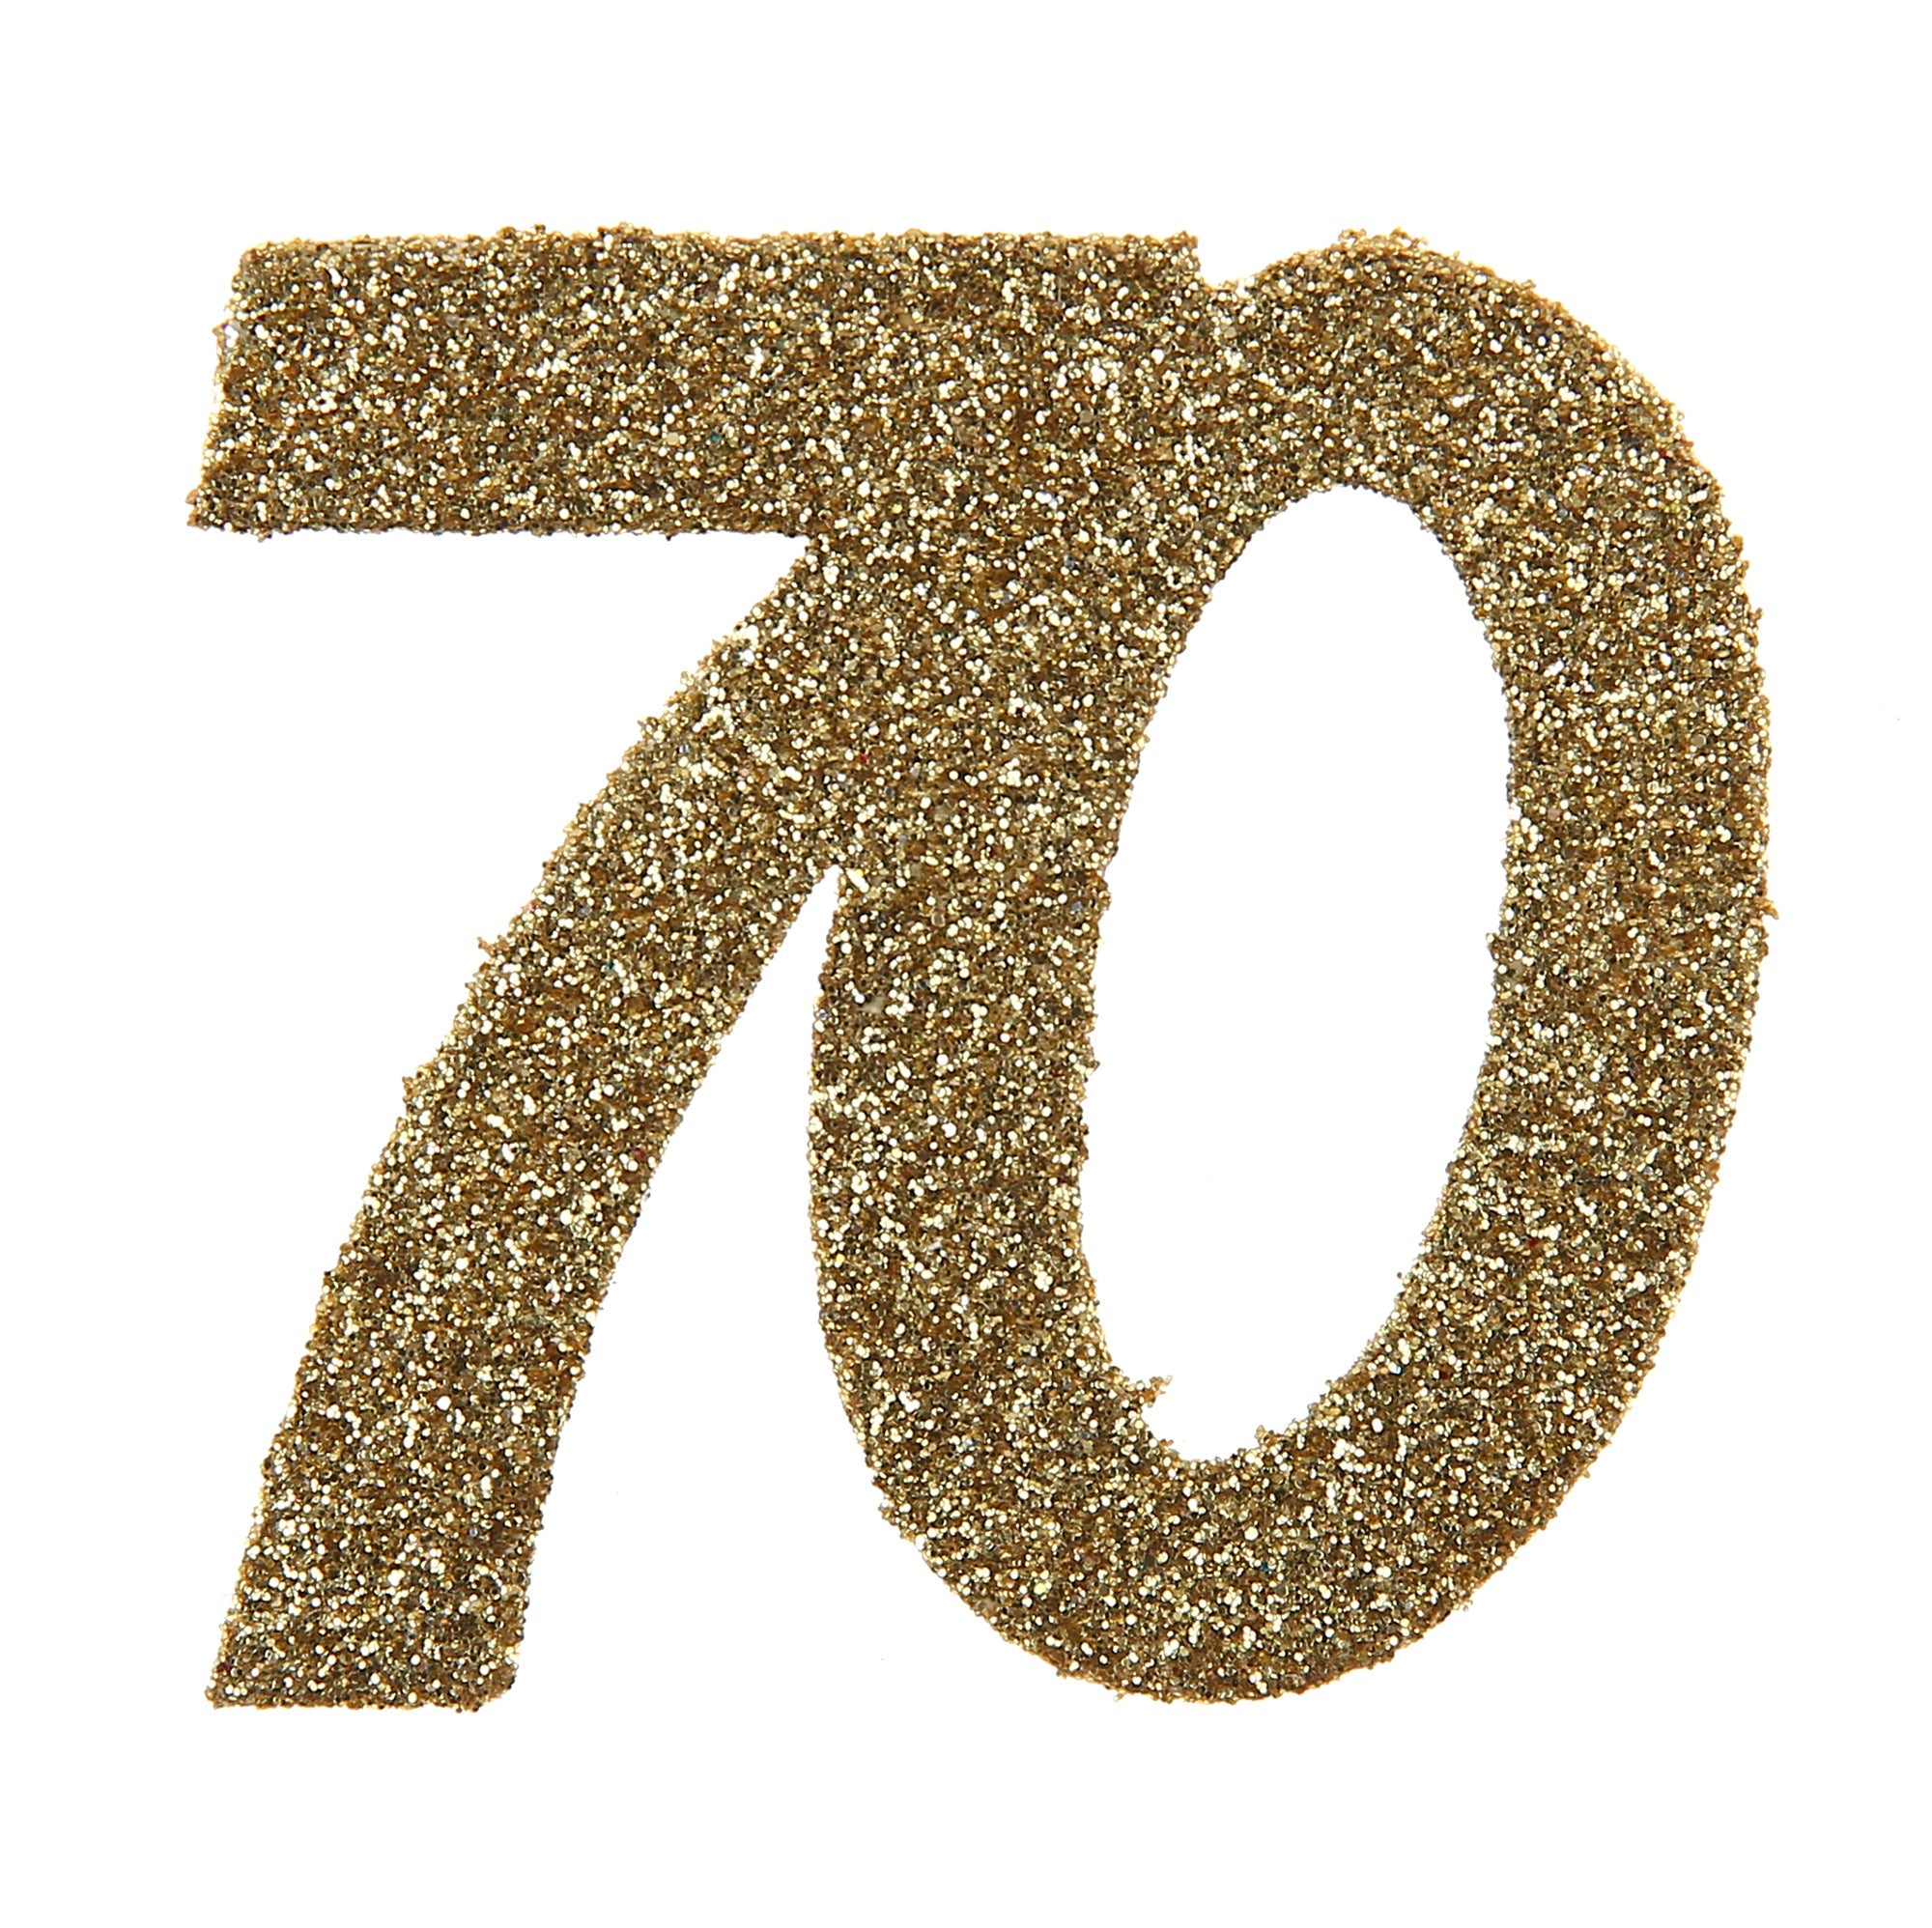 Age 70 6 Small Decorations Gold Glitter 2.4x2.4in